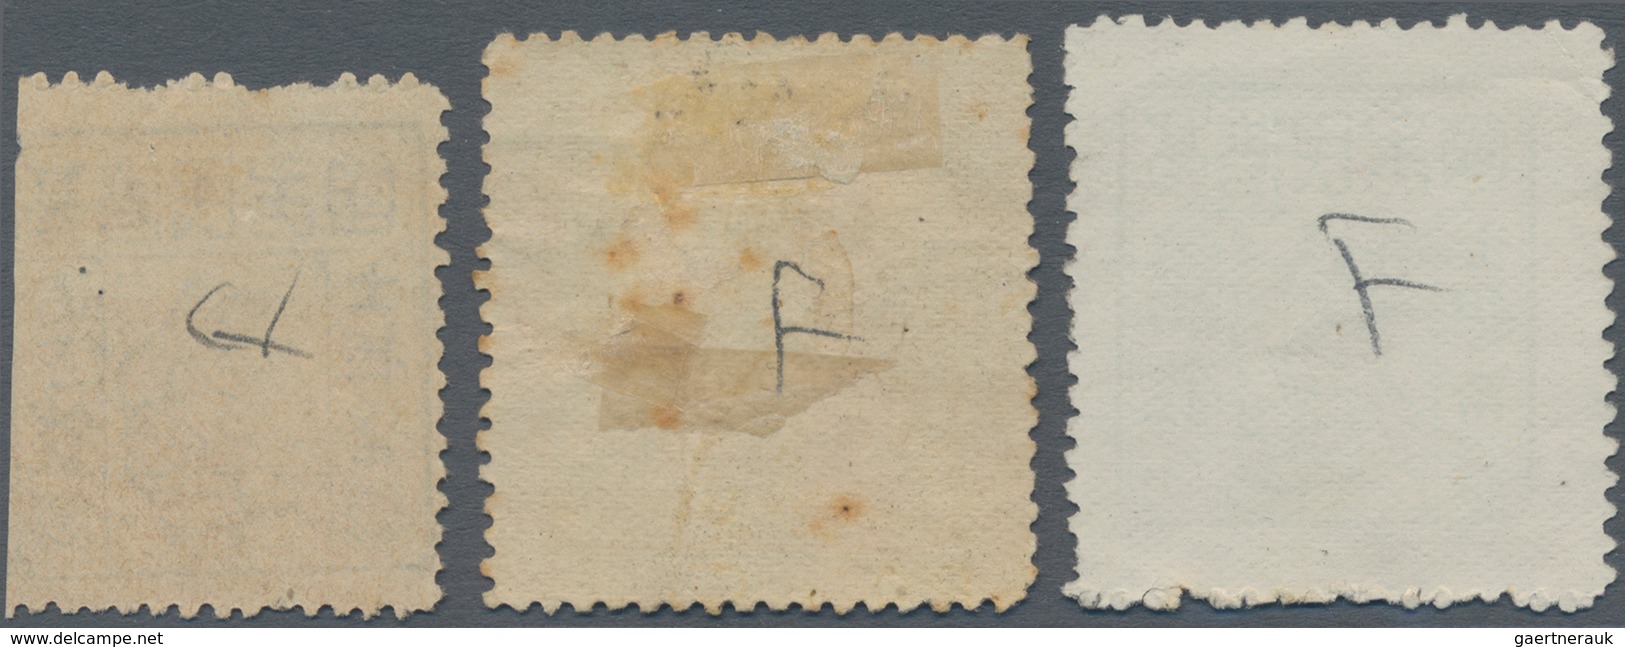 China - Taiwan (Formosa): 1895, Black Flag Republic Issues Die III Accumulation Mint No Gum As Issue - Gebraucht